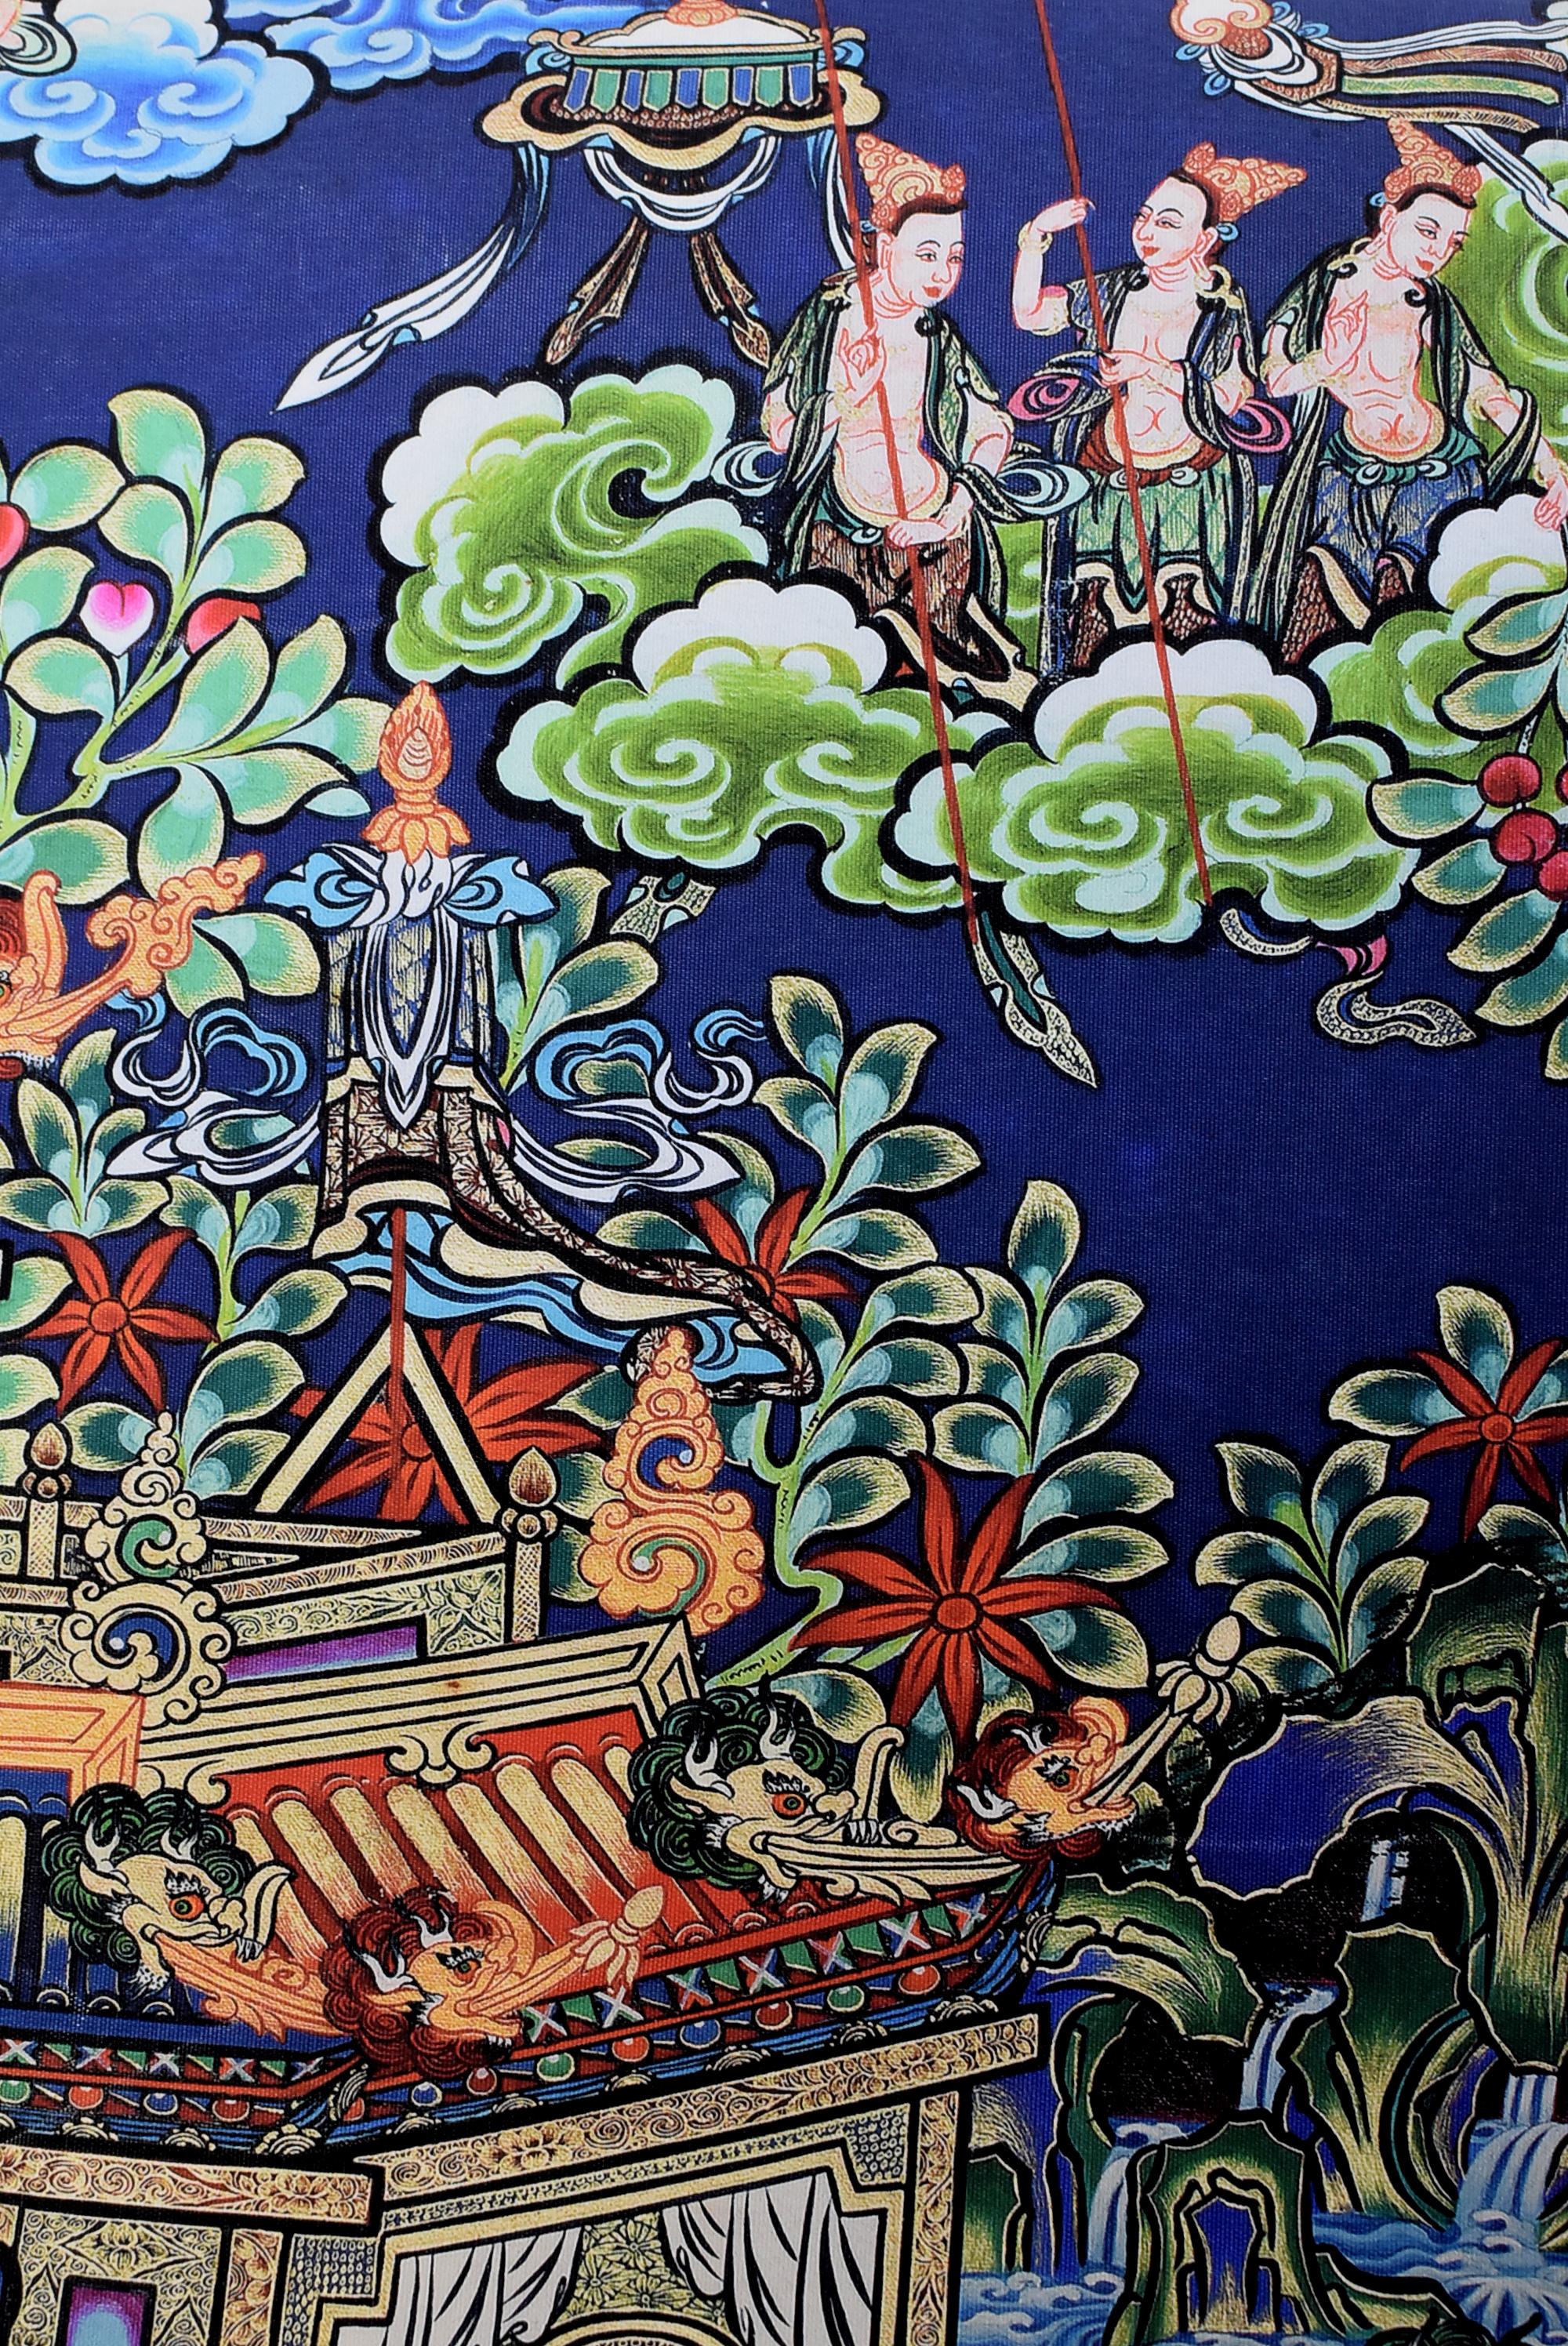 Contemporary Tibetan Thangka Painting, Dorje Drolo Thanka